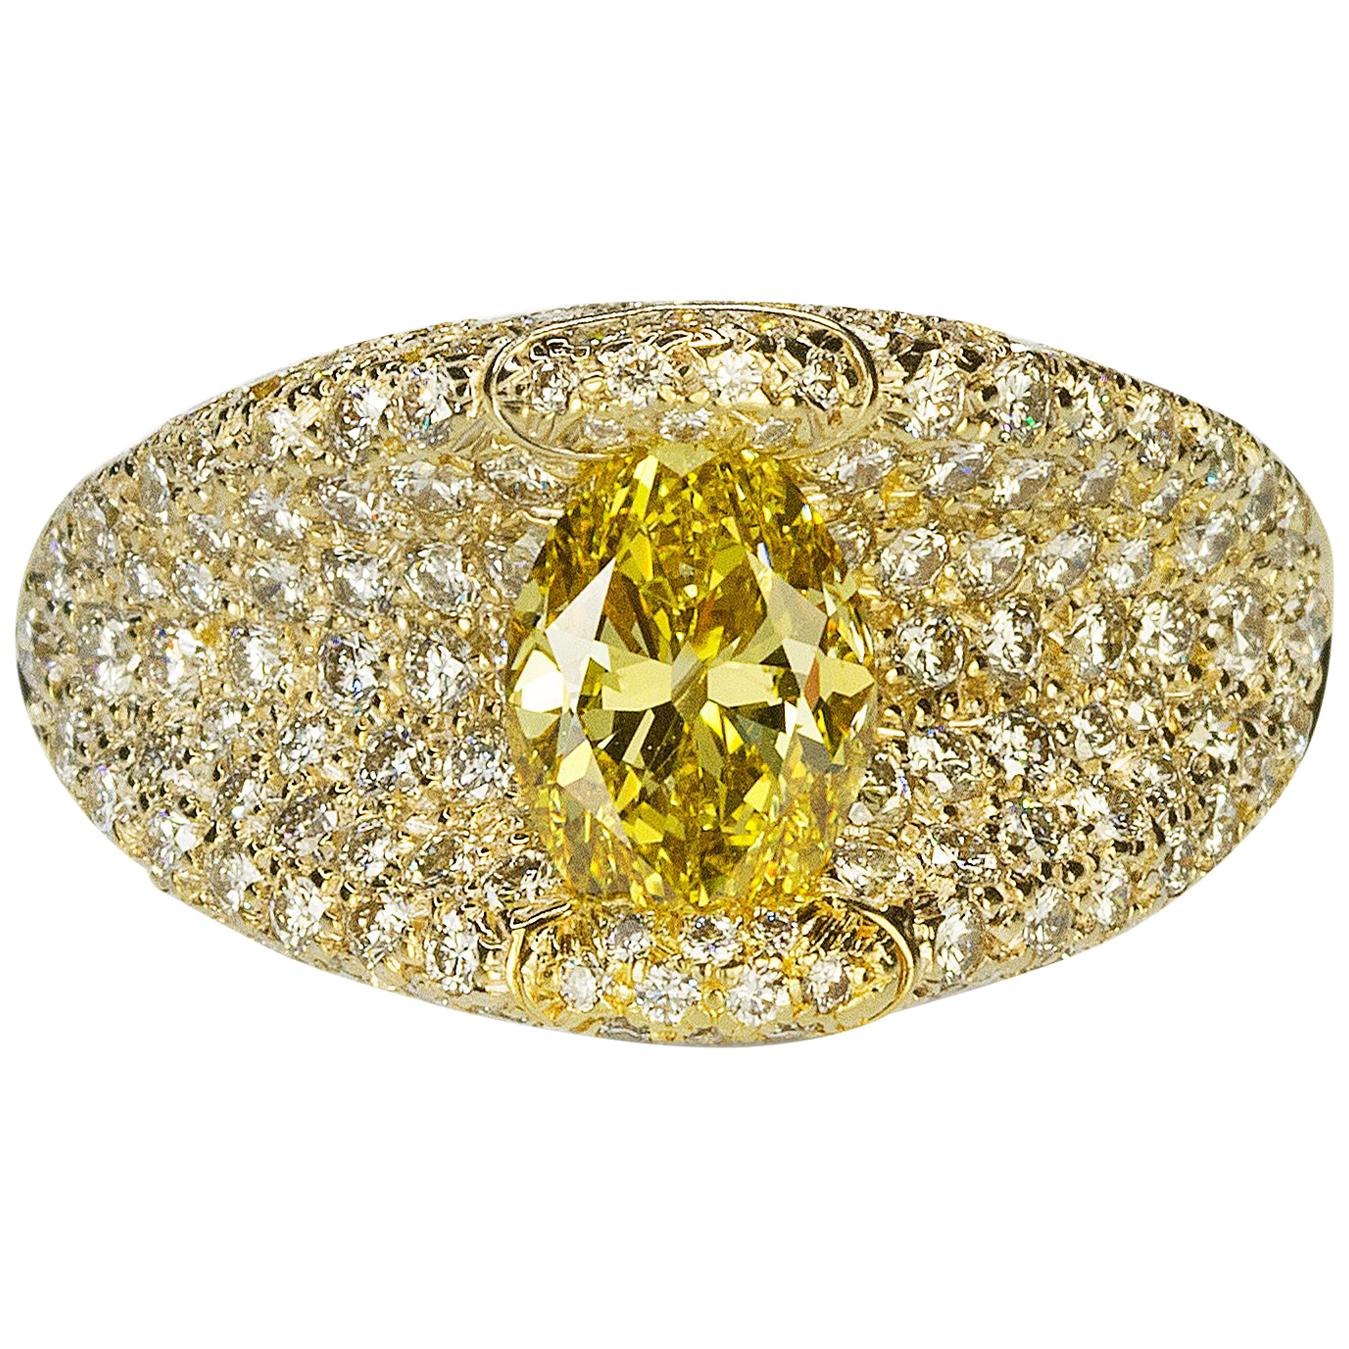 Magnificent 18 Karat Henry Dunay Fancy Vivid Yellow Diamond Ring